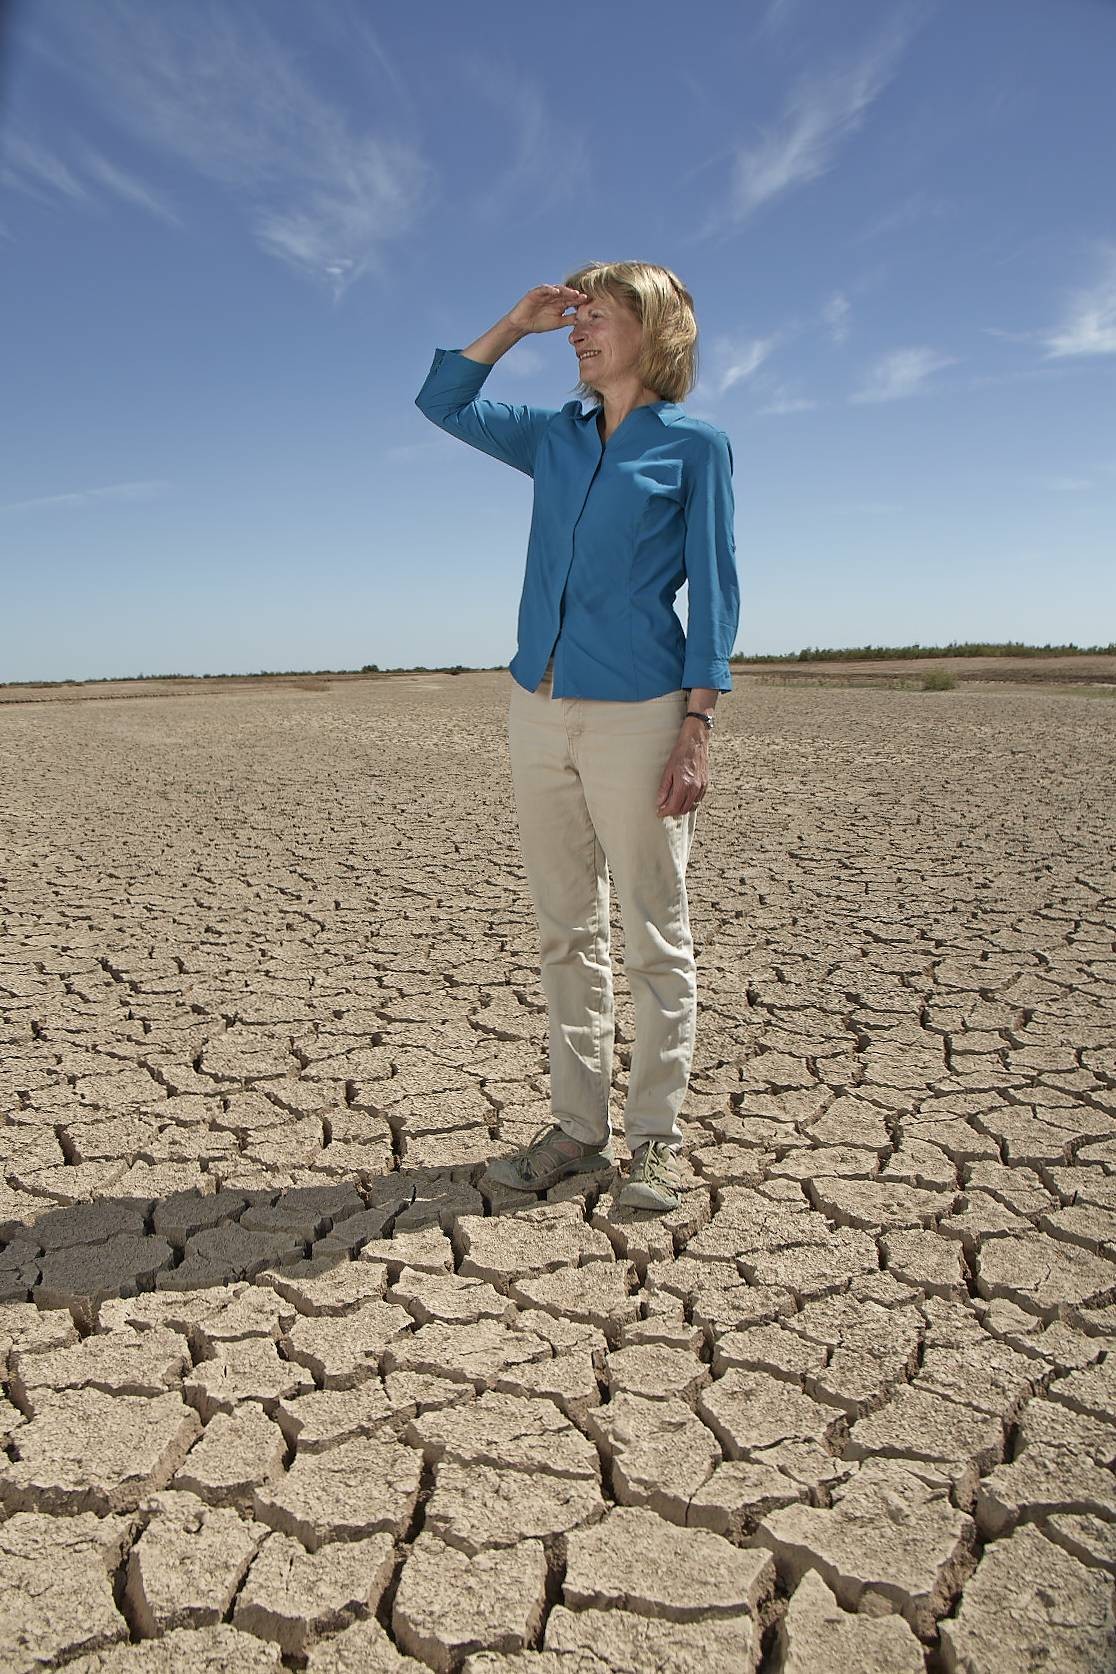 Breakthrough - Episódio 'A Crise da Água', dirigido por Angela Bassett (Foto: National Geographic Channels)